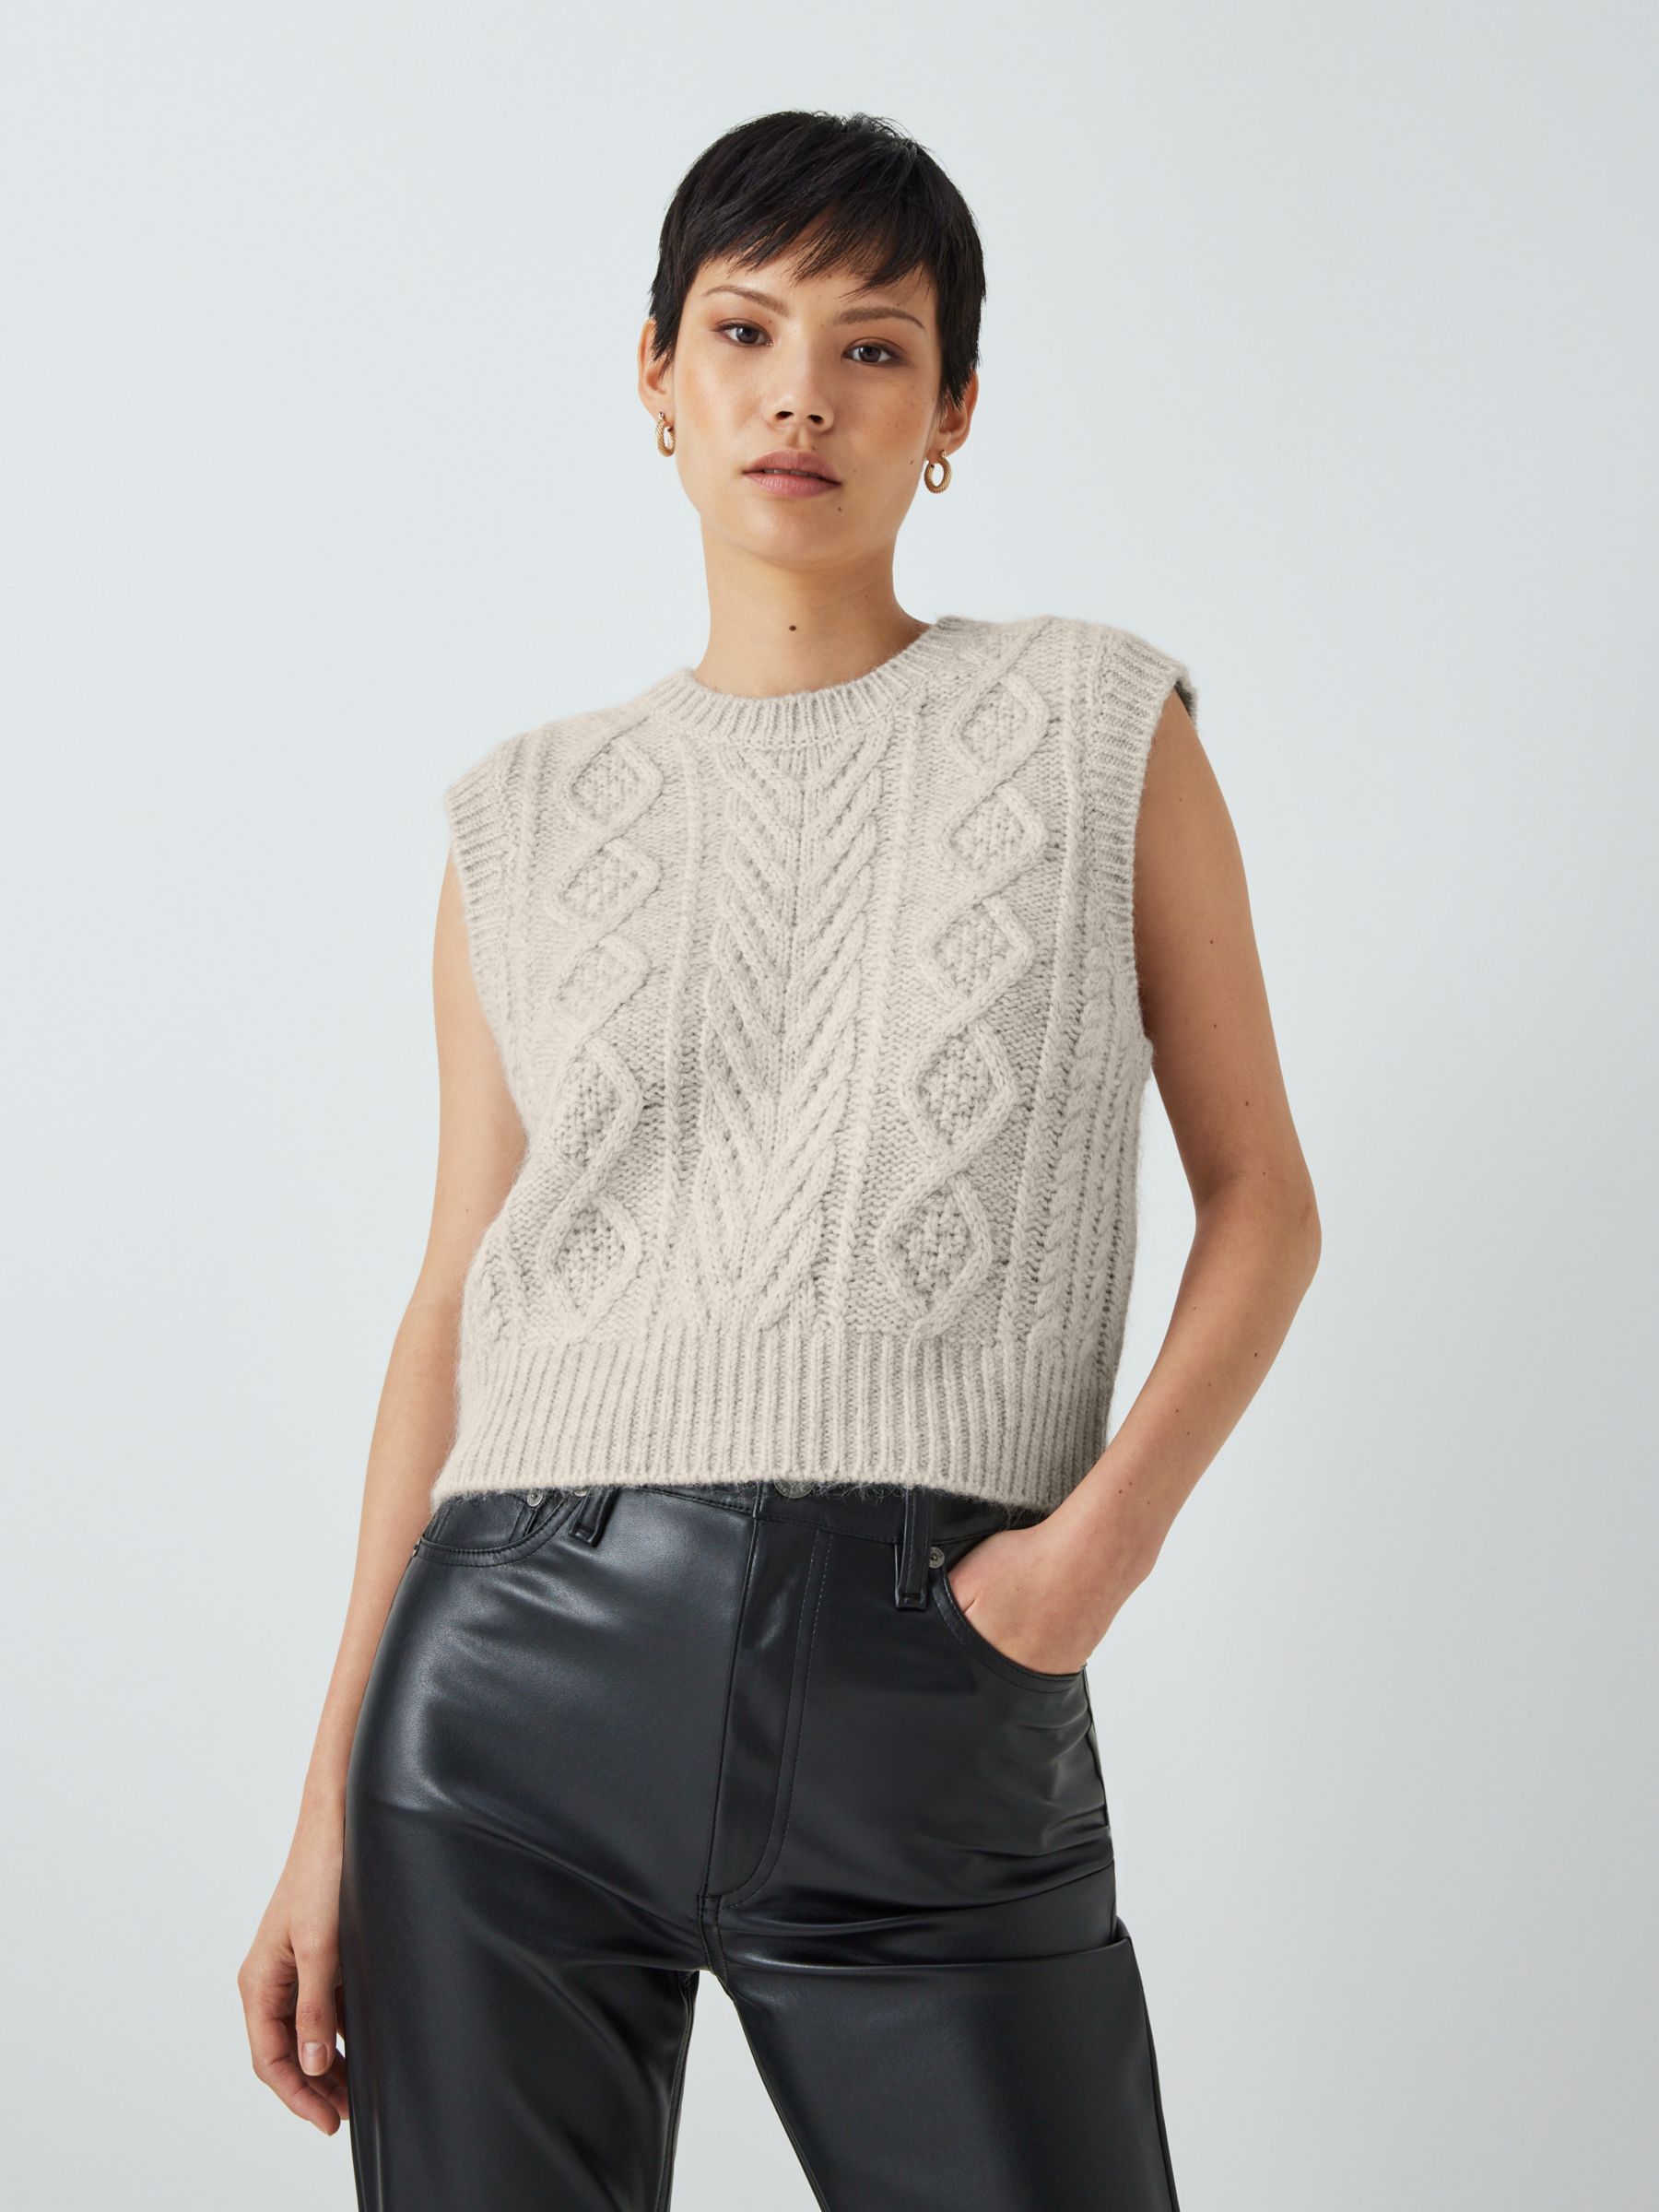 Loose knit vest (cream) – Hambro & Miller